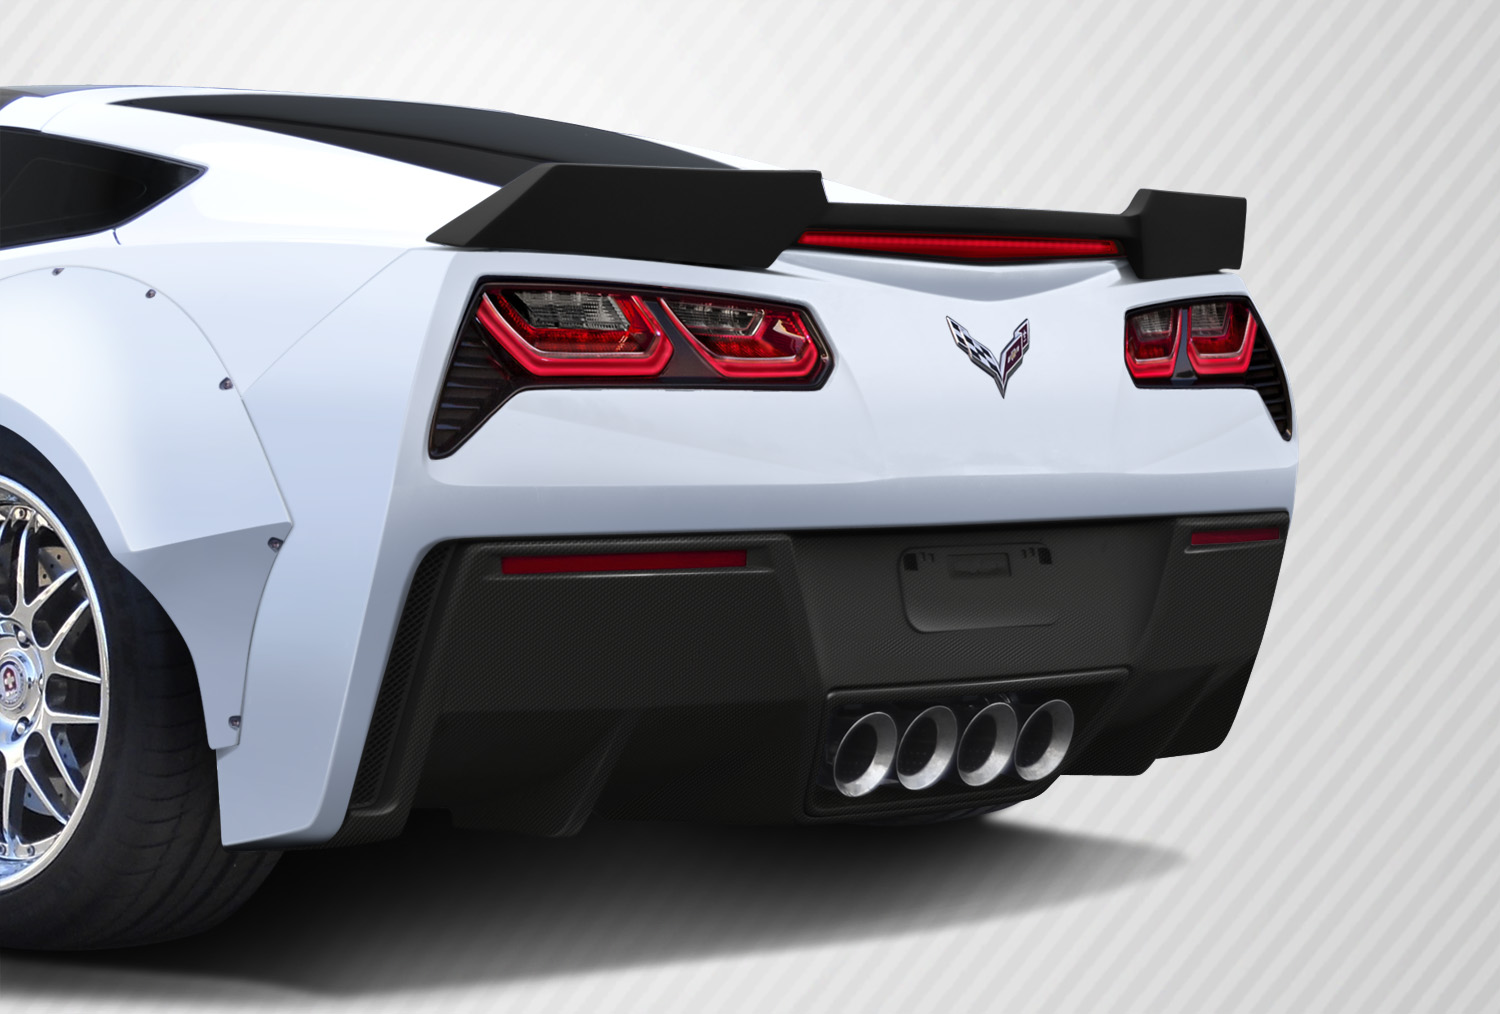 2016 Chevrolet Corvette ALL - Carbon Fiber Fibre Rear Lip/Add On Bodykit - Chevrolet Corvette C7 Carbon Creations GT Concept Rear Diffuser - 2 Piece